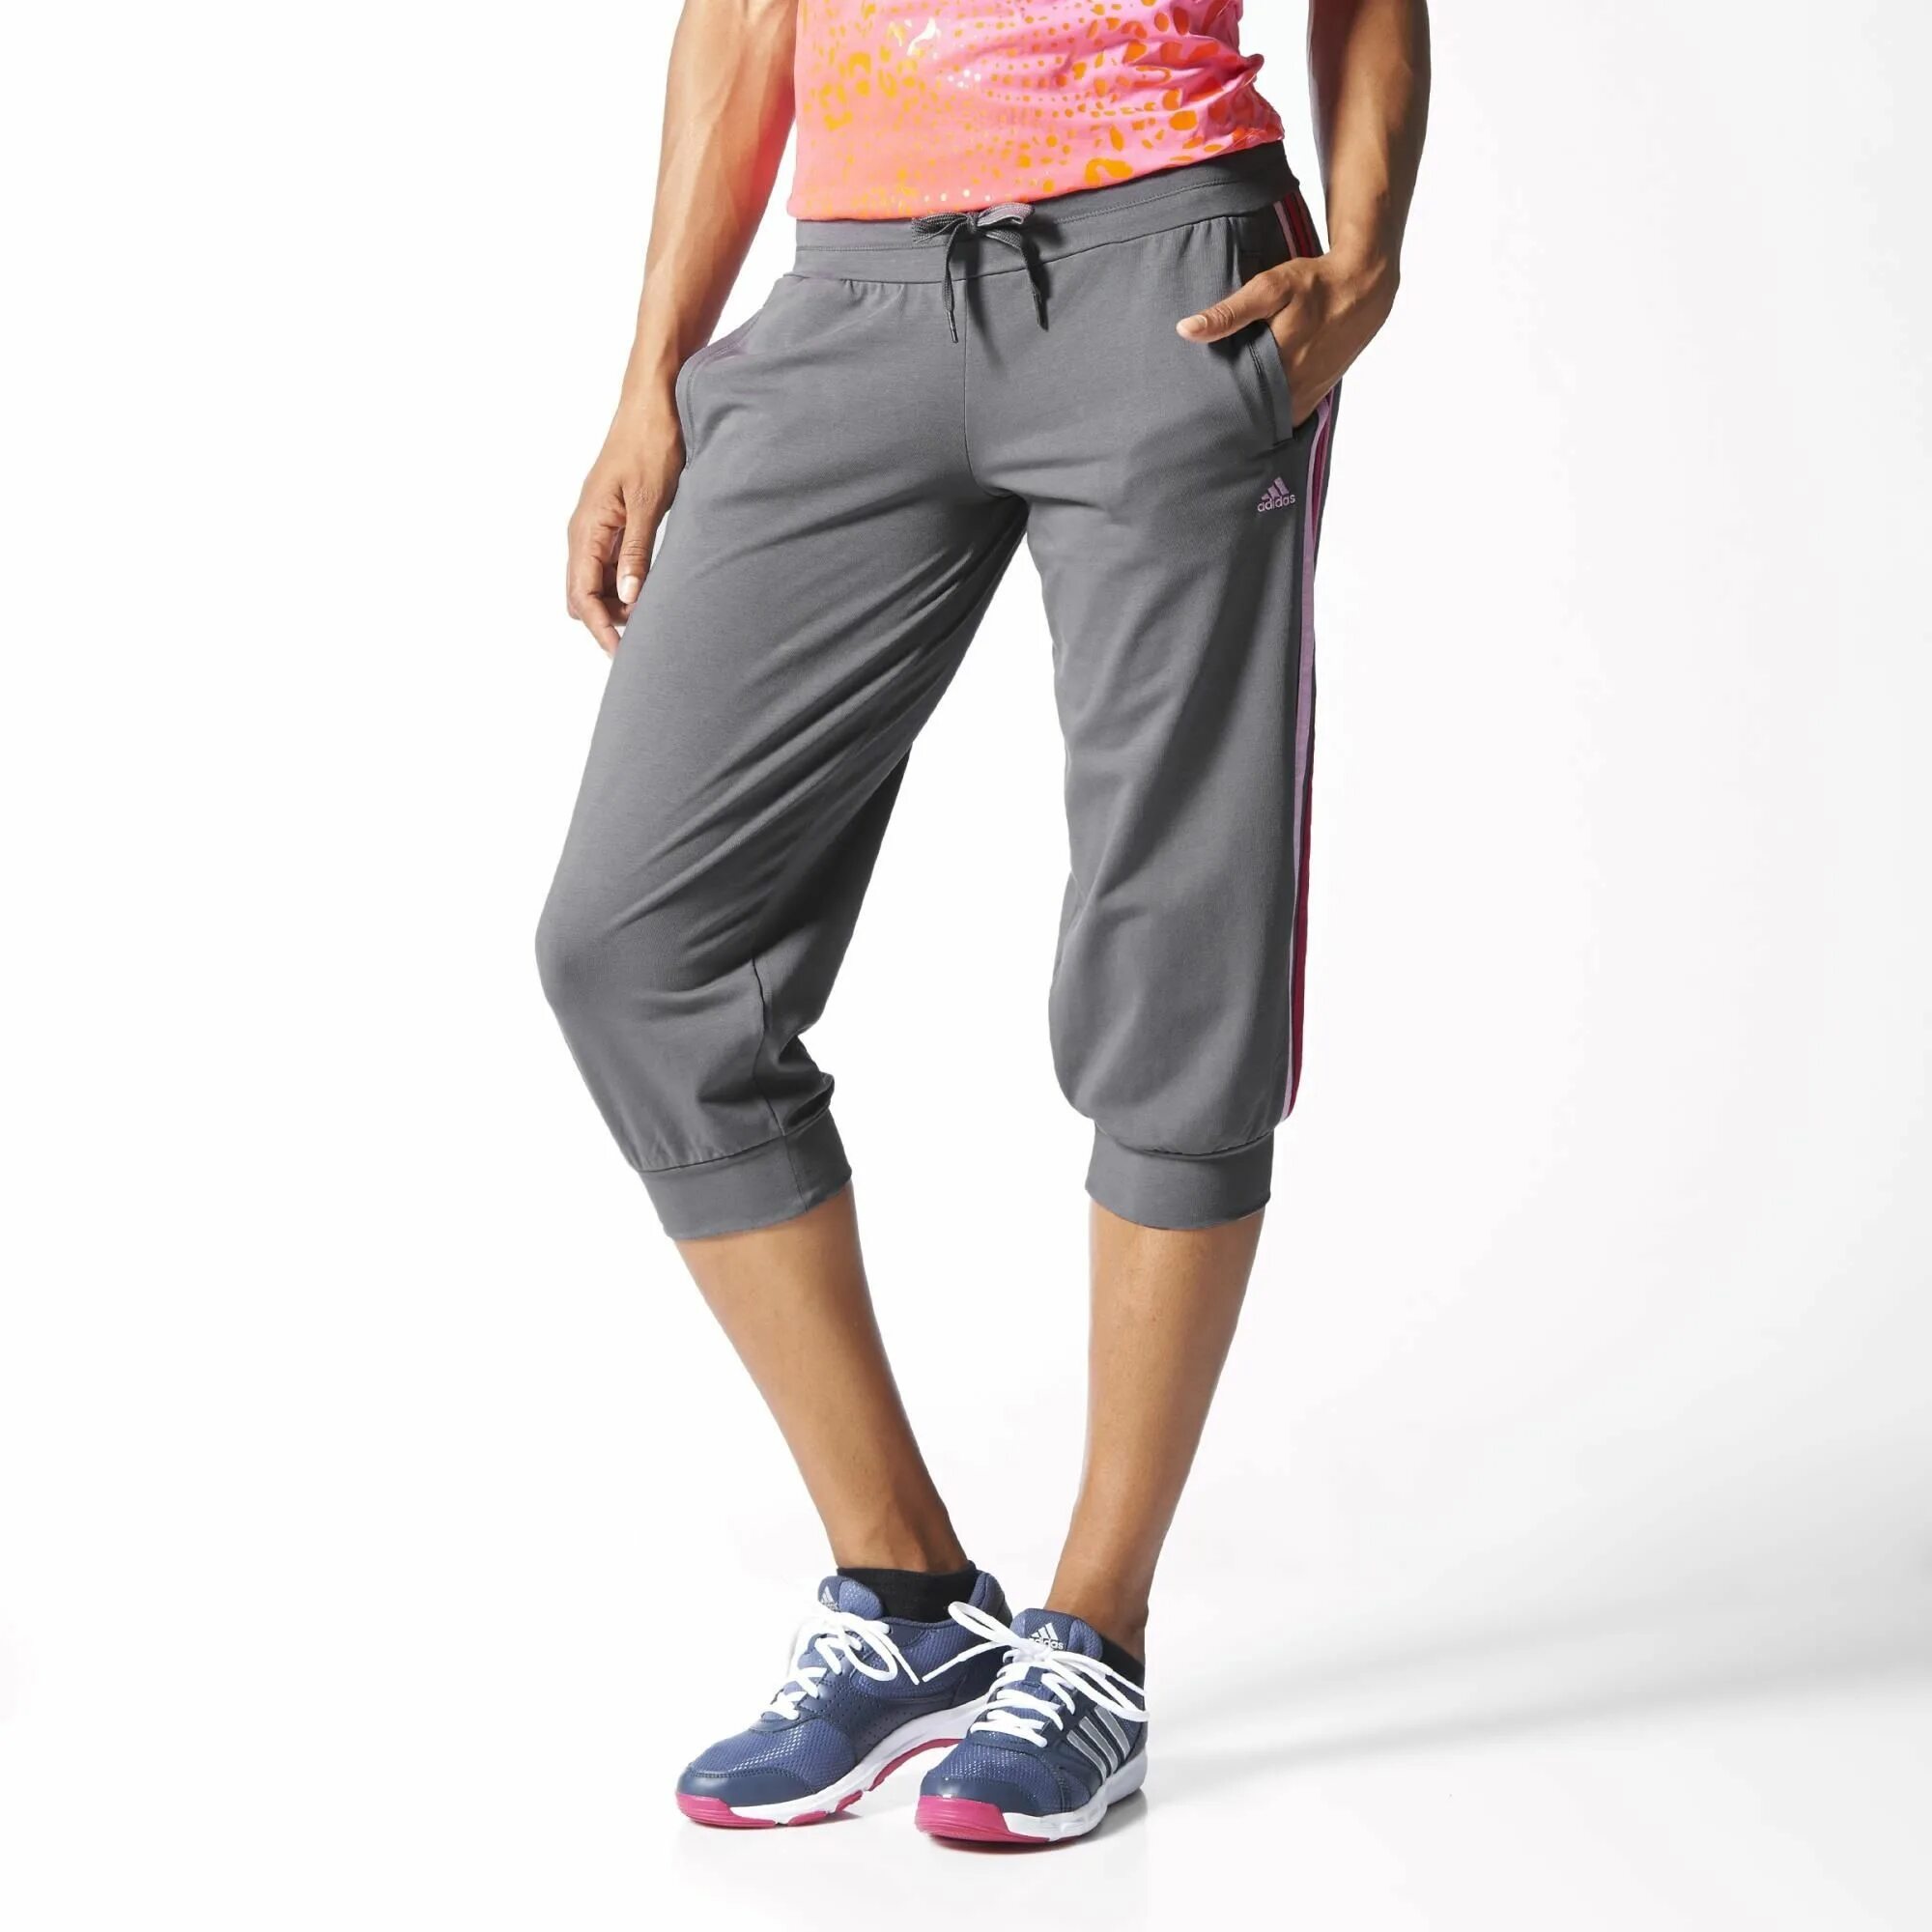 Капри adidas Yoga Knit Capri. Бриджи adidas Neo #105337257. Бриджи женские adidas x31244 SNRSO 3/4 ti w. Брюки капри адидас женские.